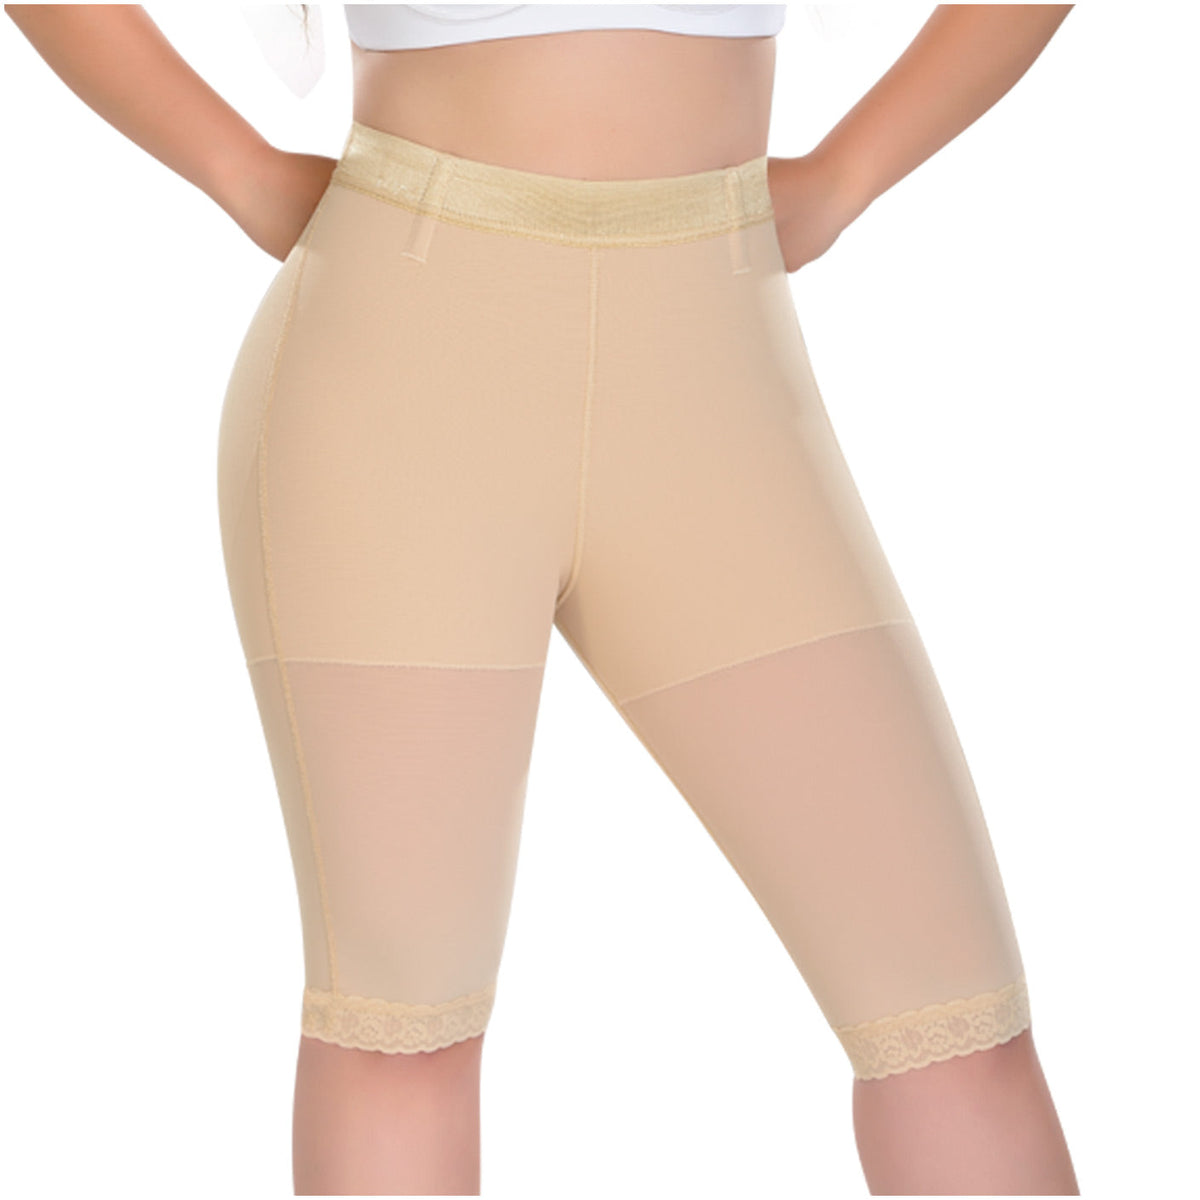 Fajas MYD 0323 High Waist Compression Shorts for Women